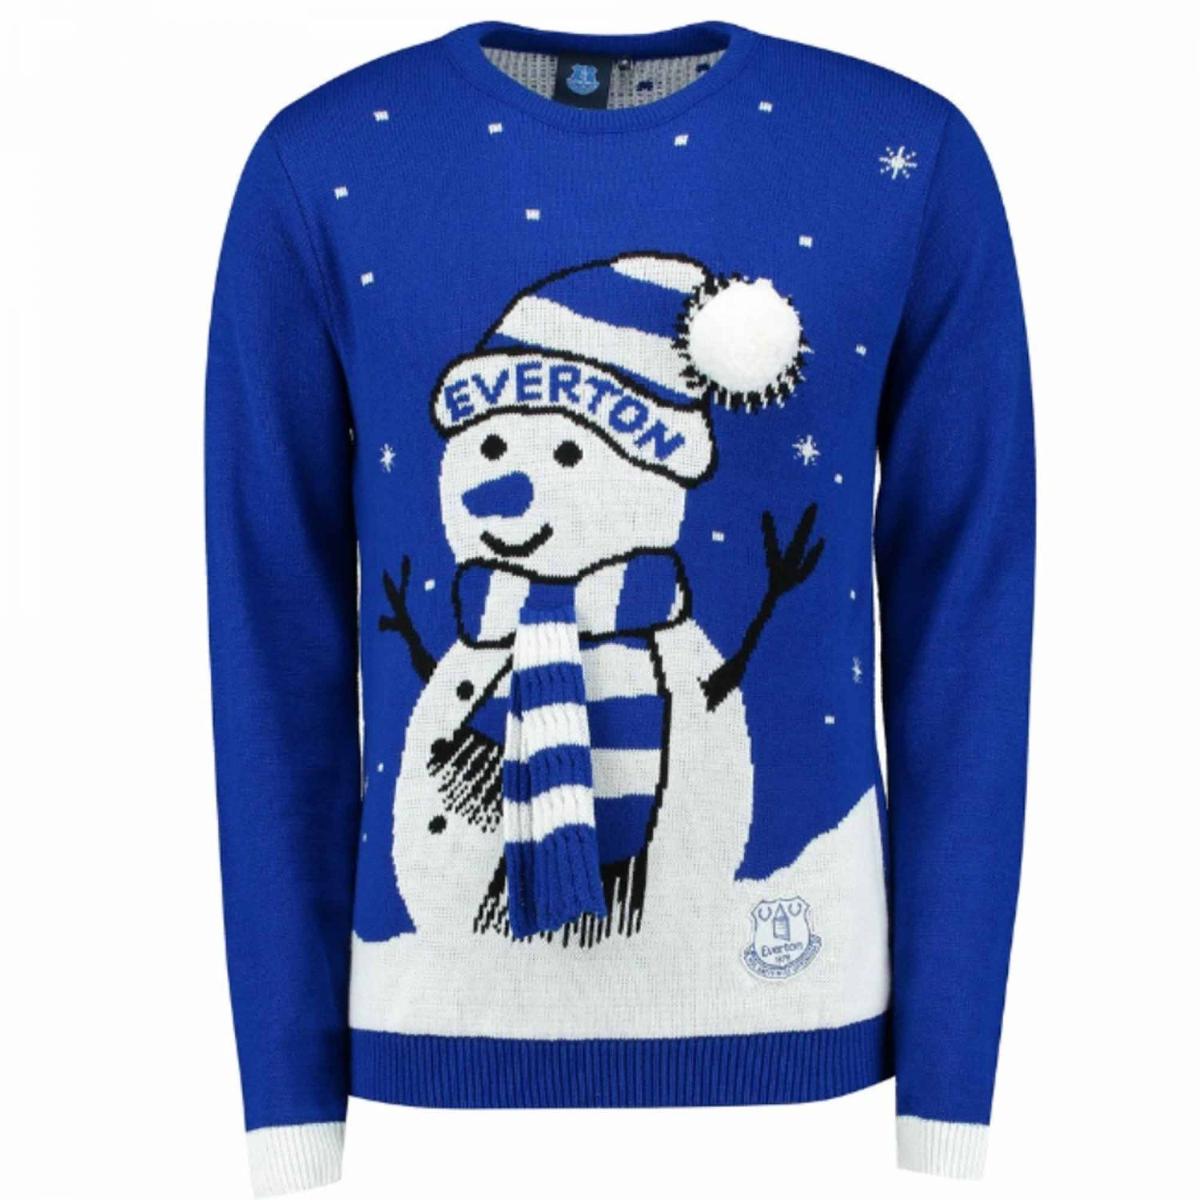 Everton Fc Blue Unisex Christmas Sweater For Fans